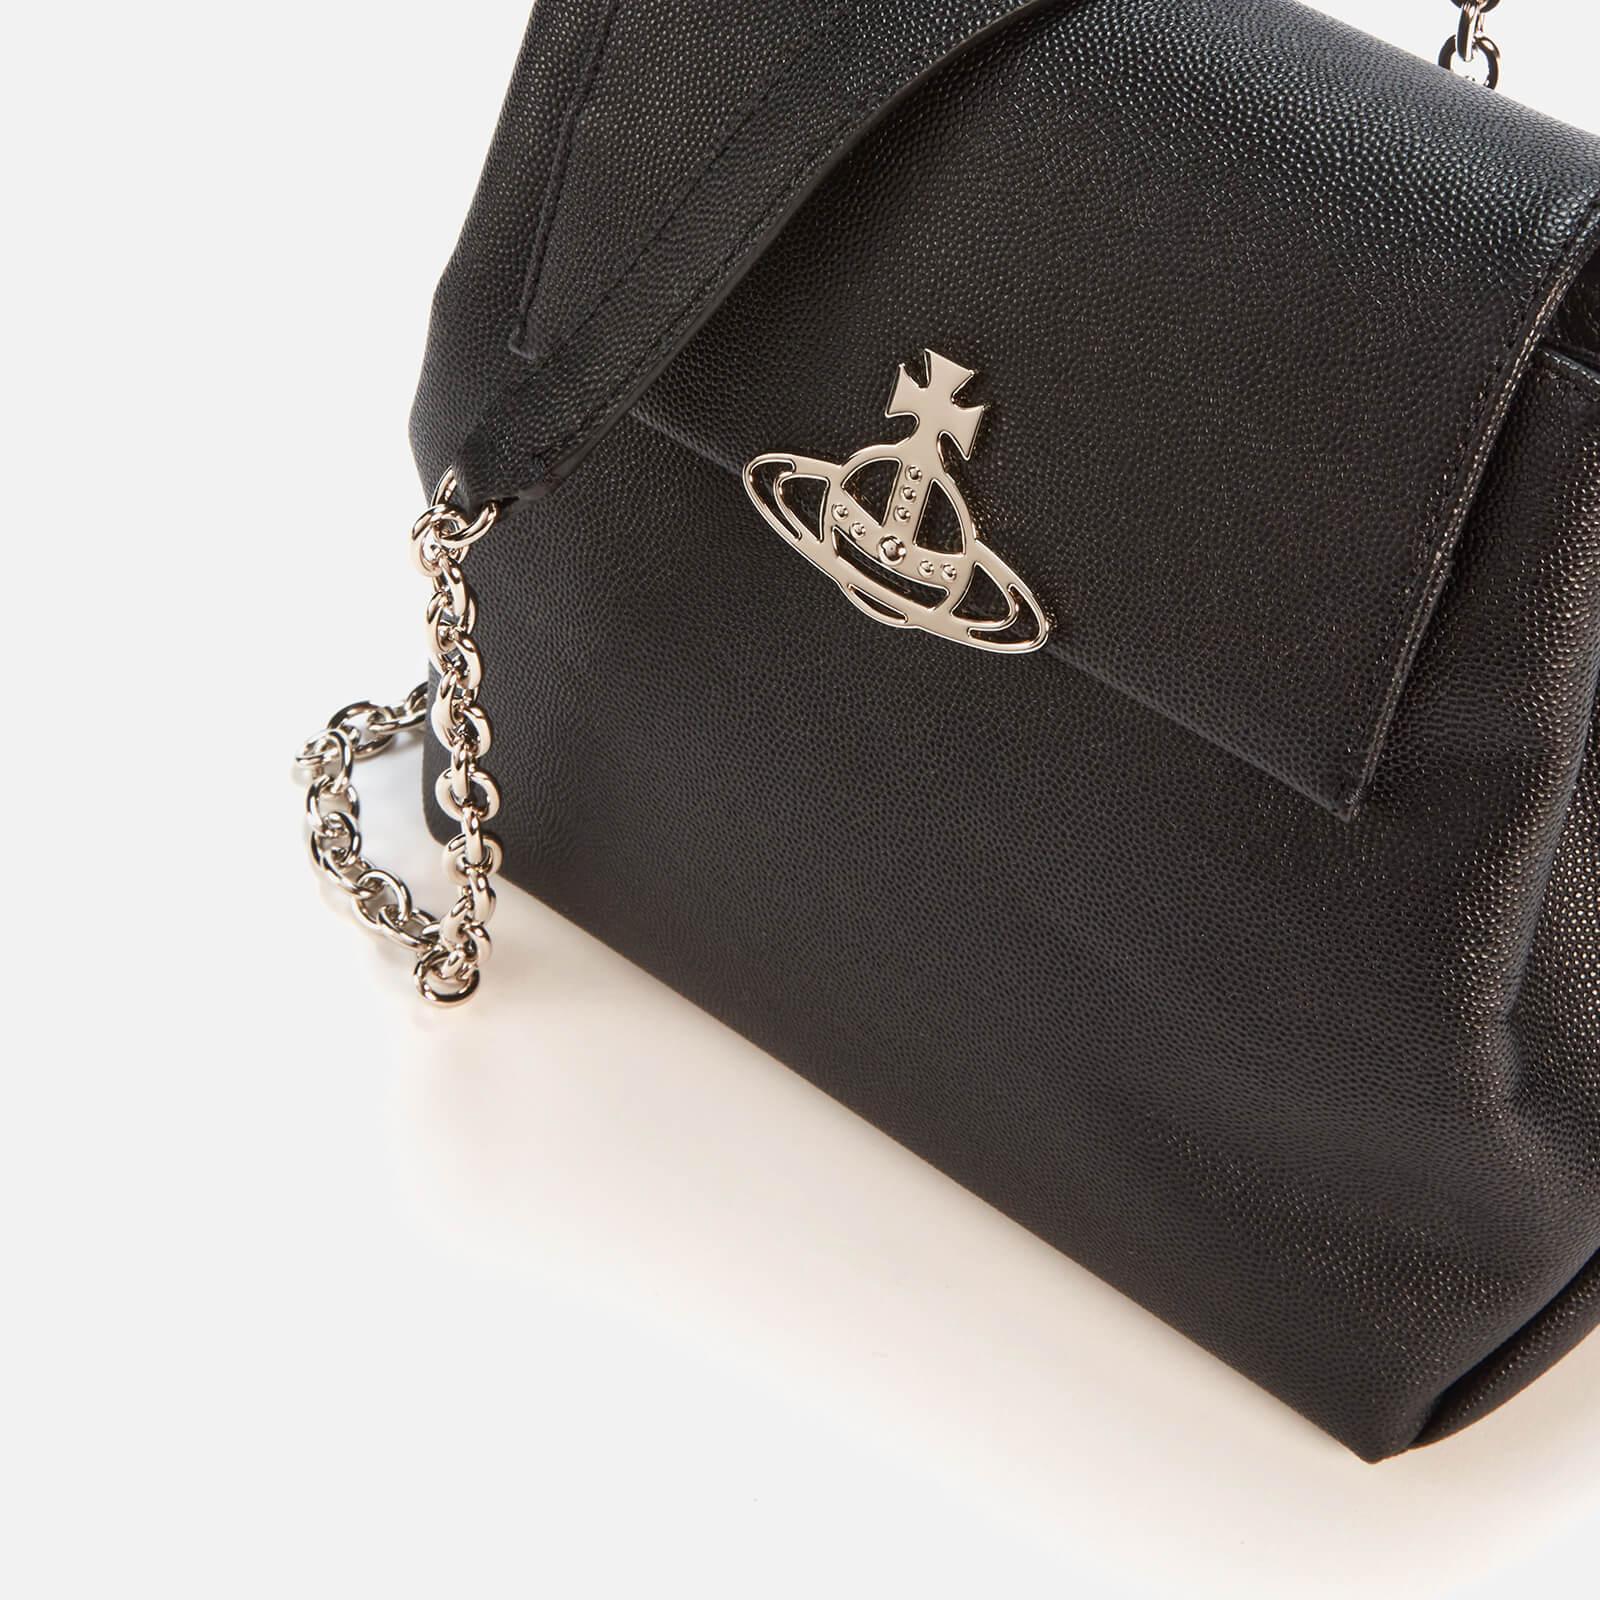 Vivienne Westwood Leather Windsor Bucket Bag in Black - Lyst